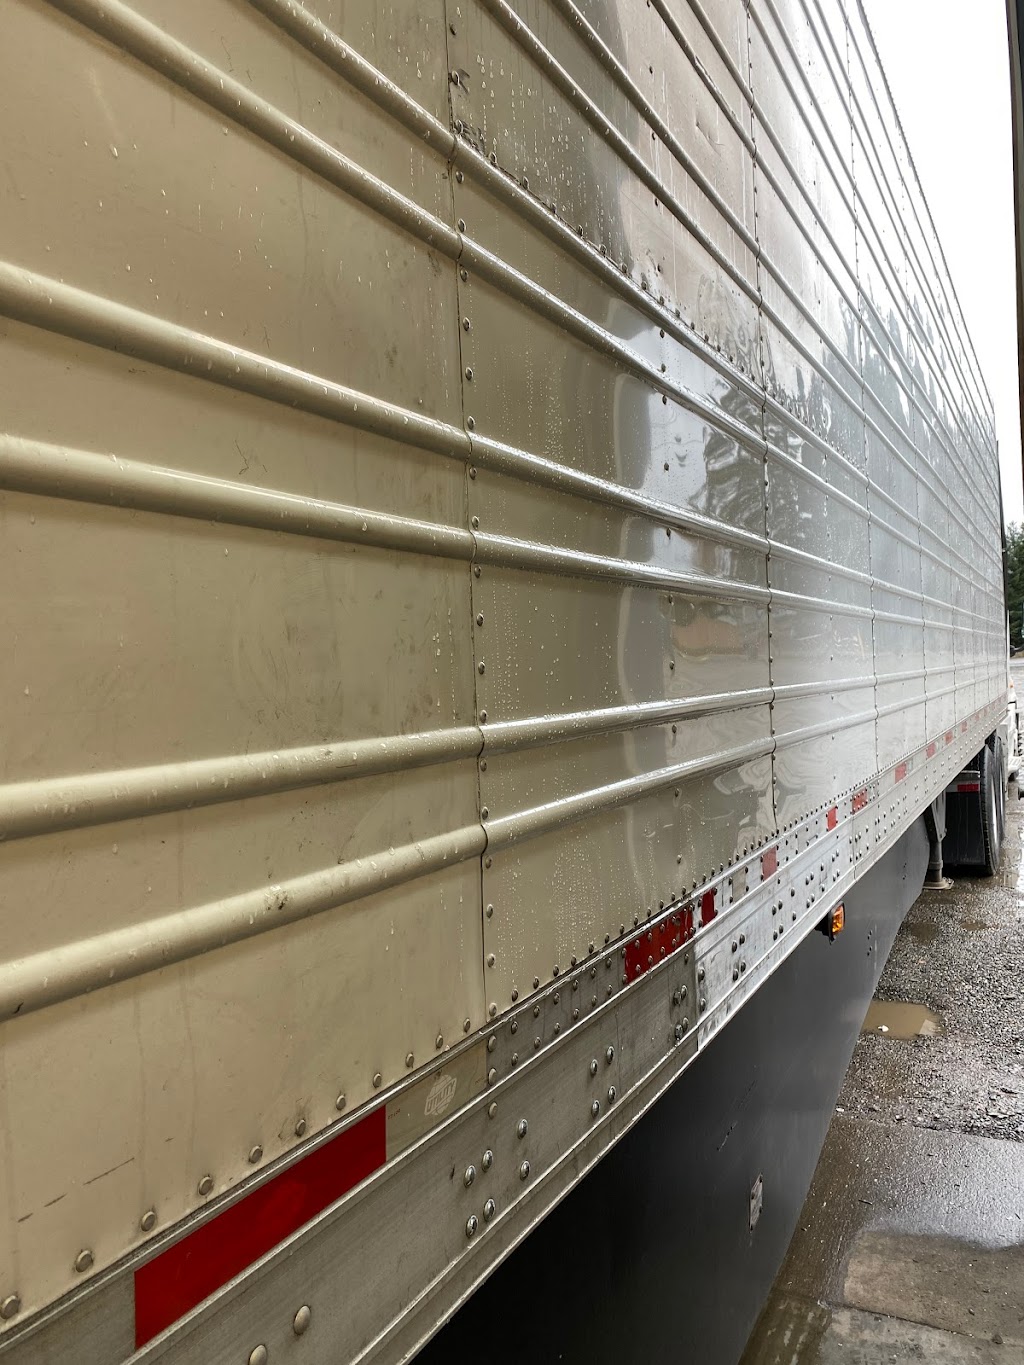 United Truck & Trailer Repair | 5408 144th St E SE, Puyallup, WA 98375, USA | Phone: (503) 673-6832